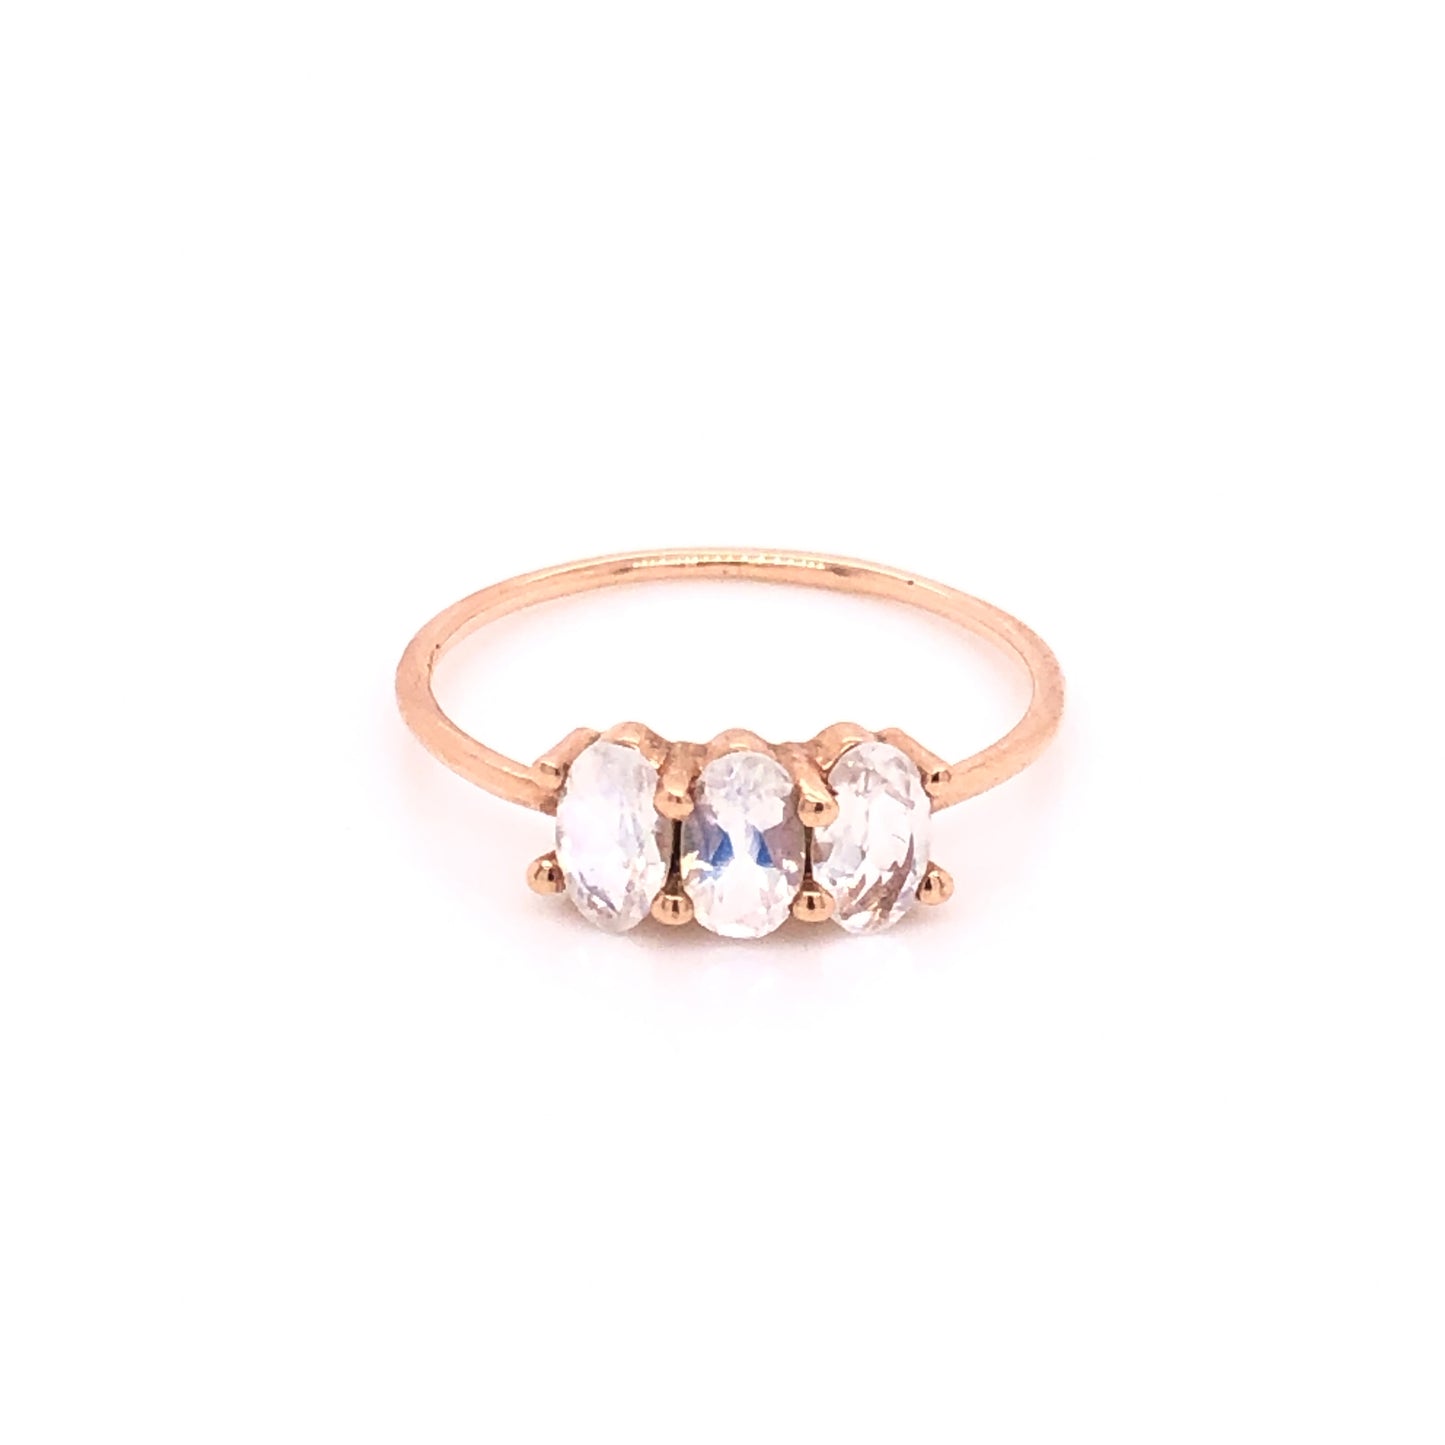 Soluna Moonstone Ring Limited Edition